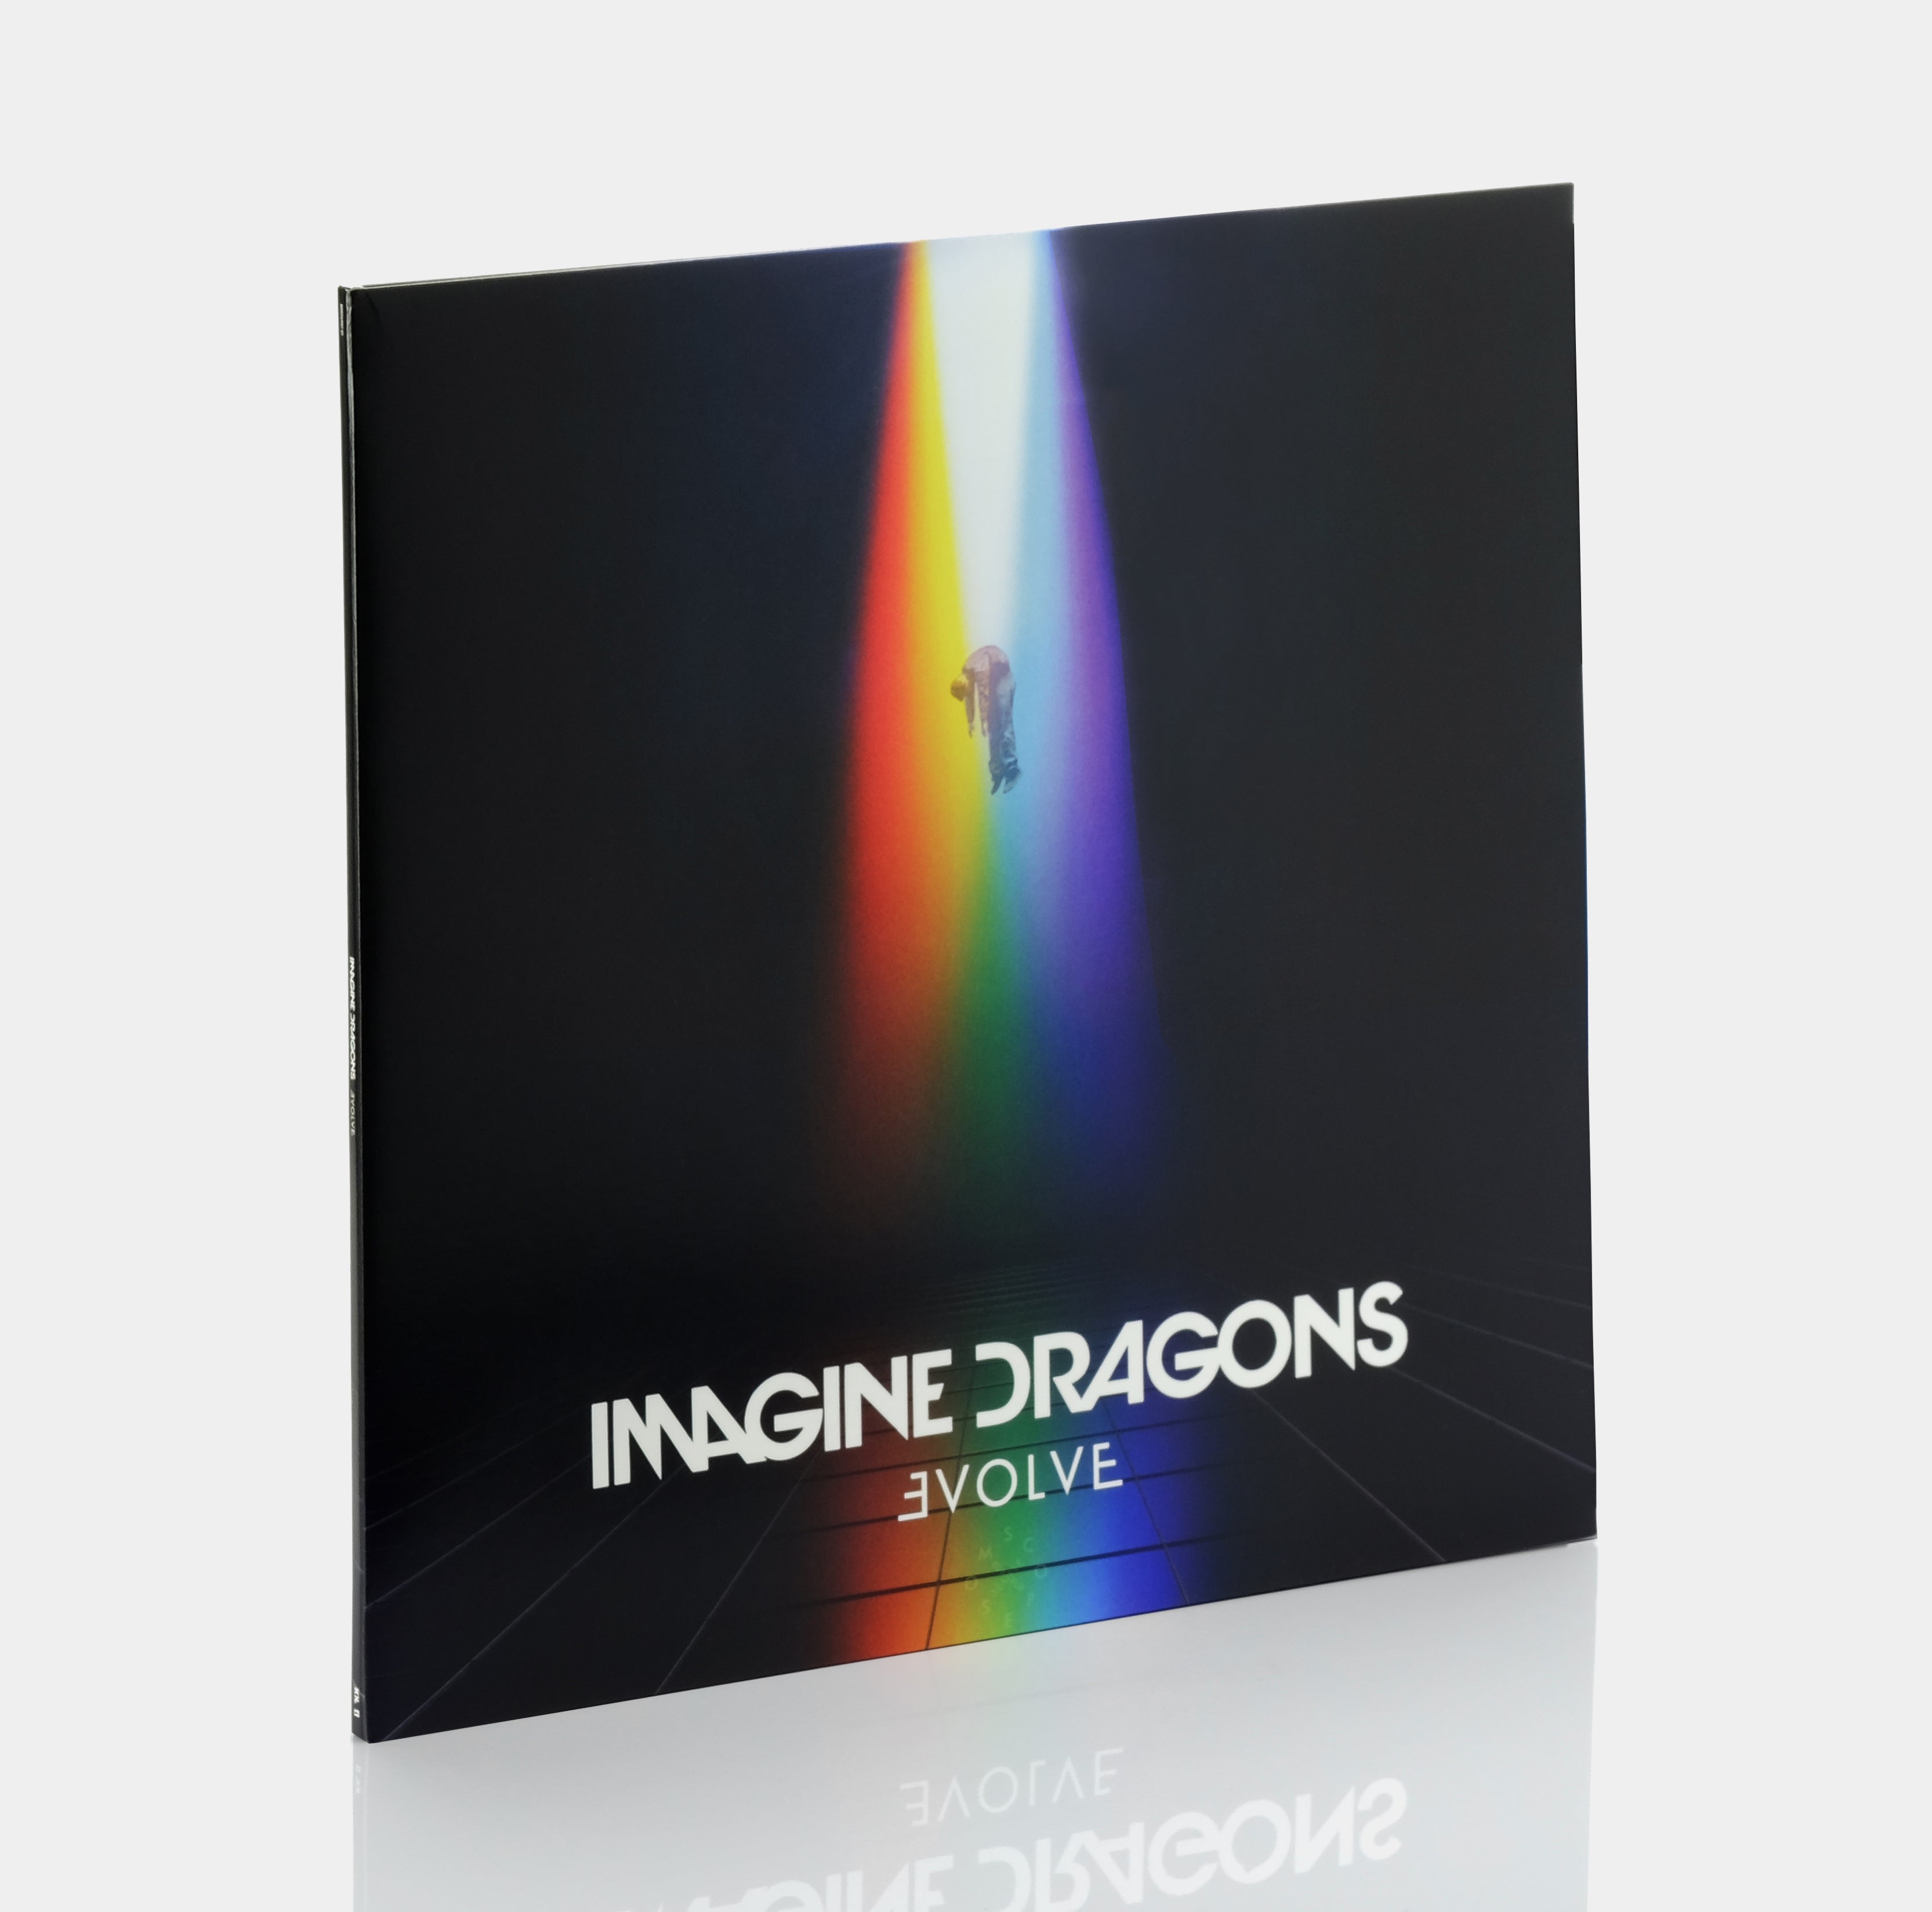 Imagine Dragons - Evolve LP Vinyl Record